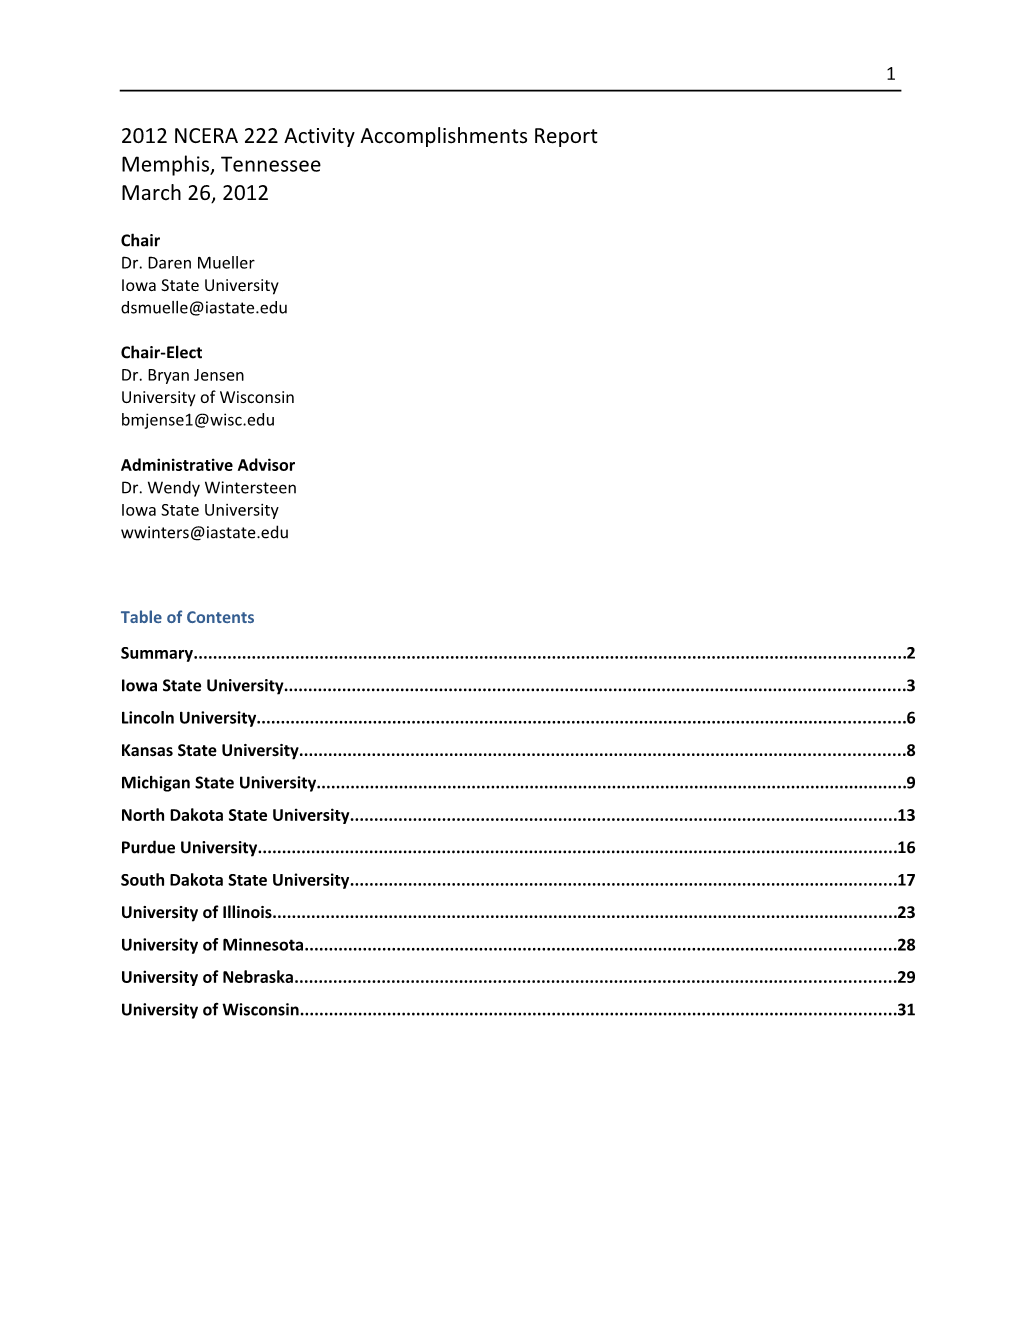 2012 NCERA 222 Activity Accomplishments Report